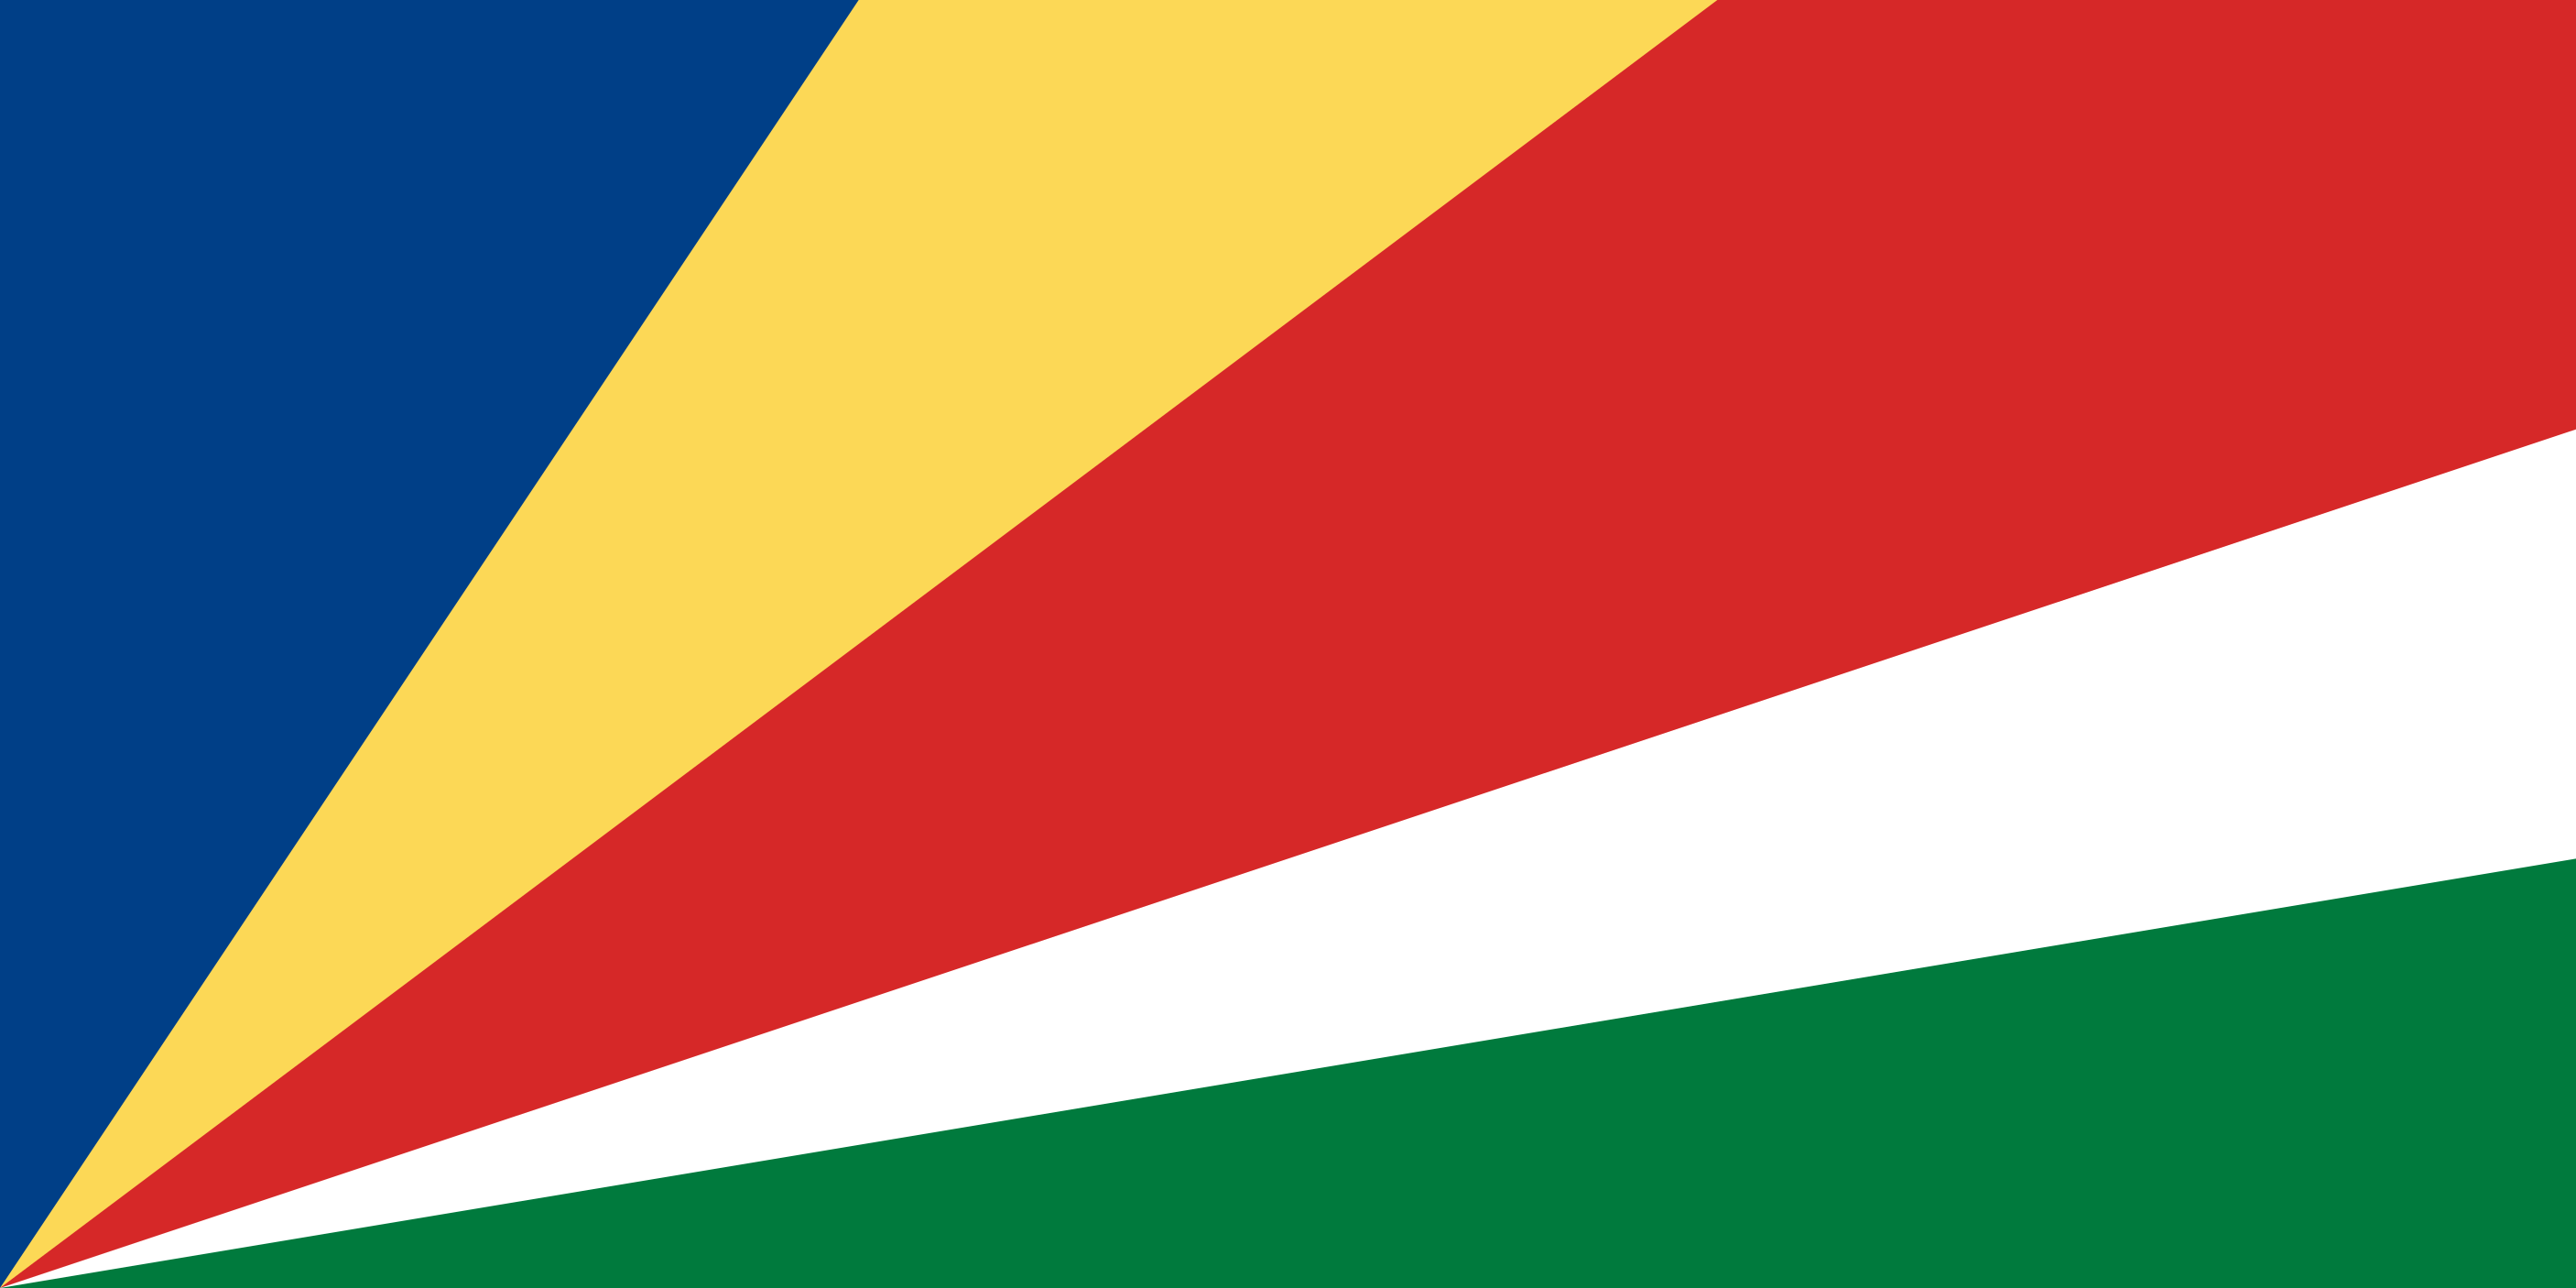 Seychelles Flag Image - Free Download